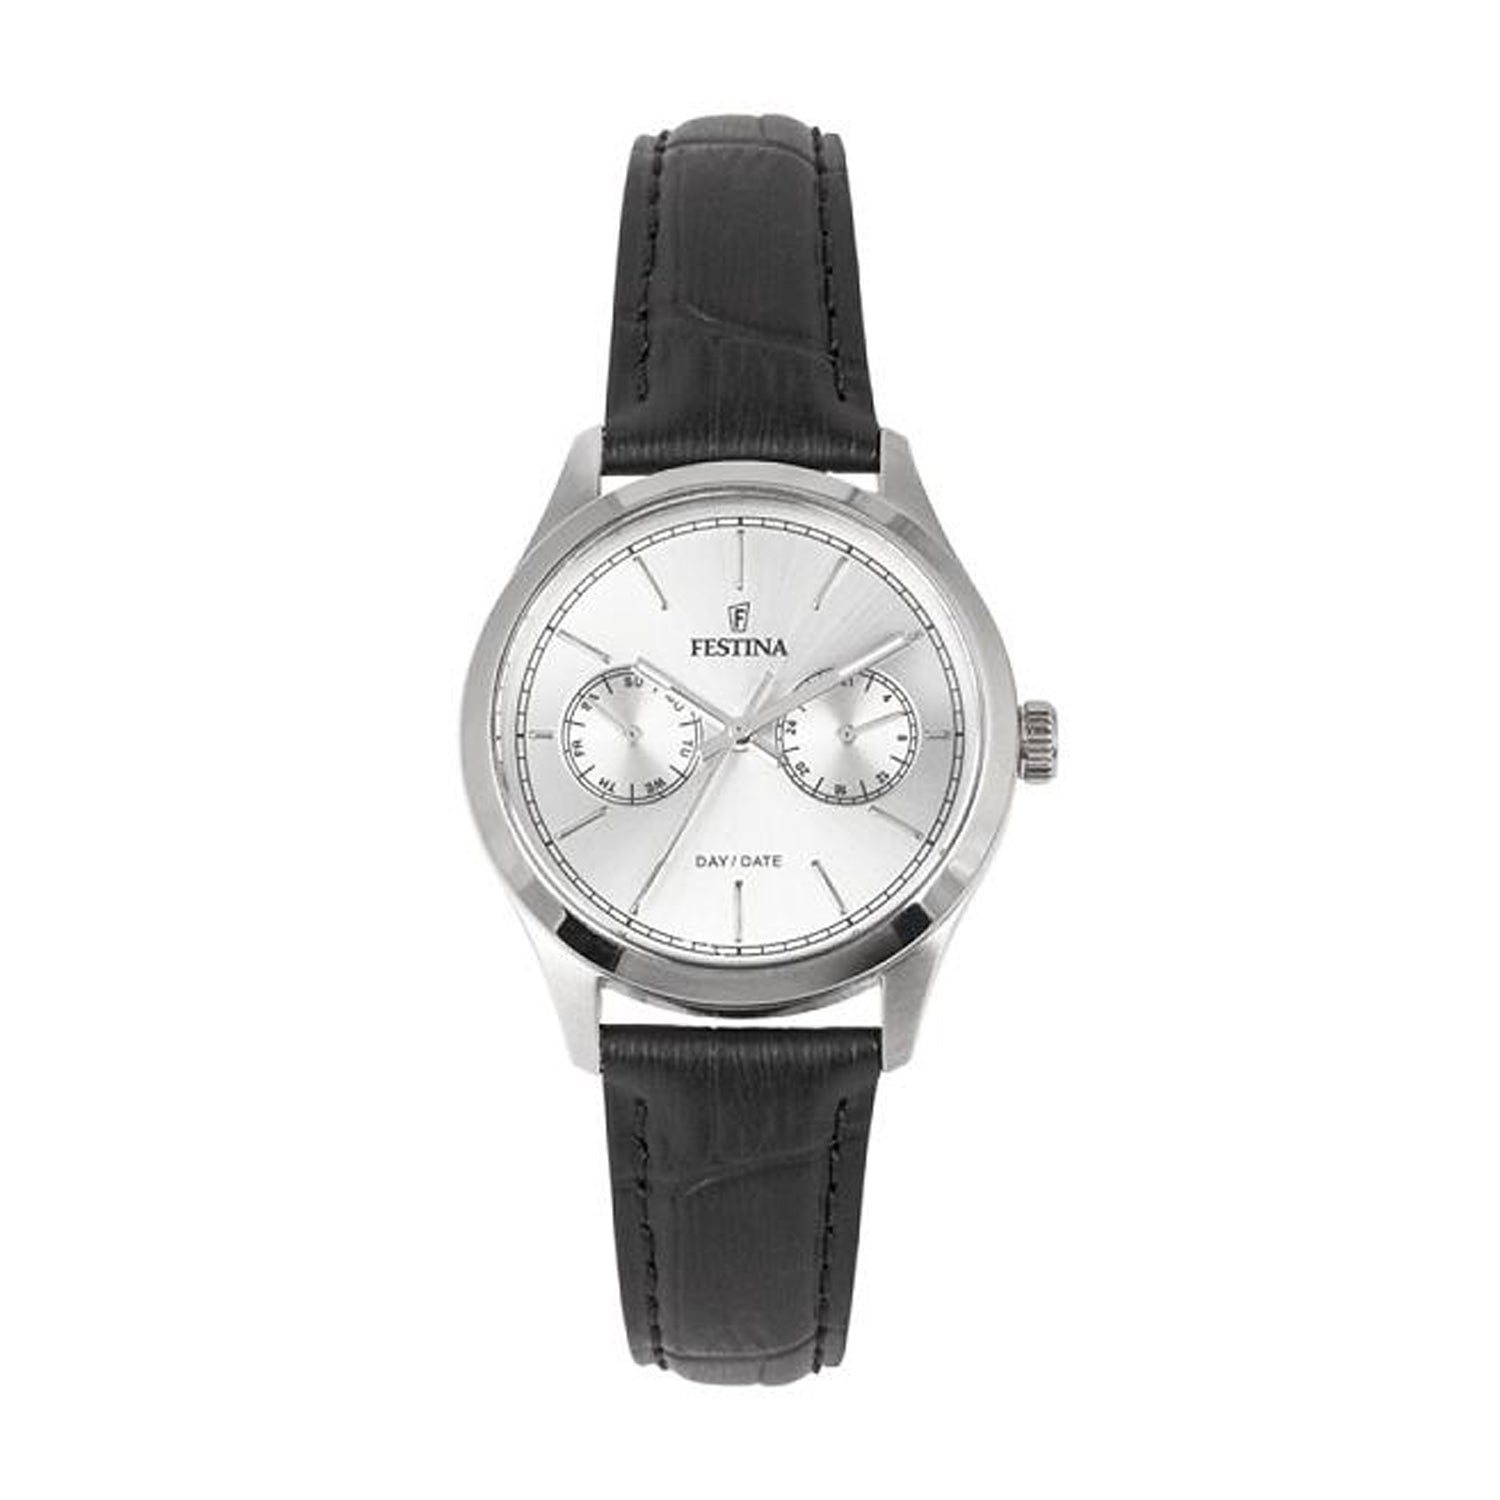 Festina Women's Quartz Watch Silver Dial - F16805/2